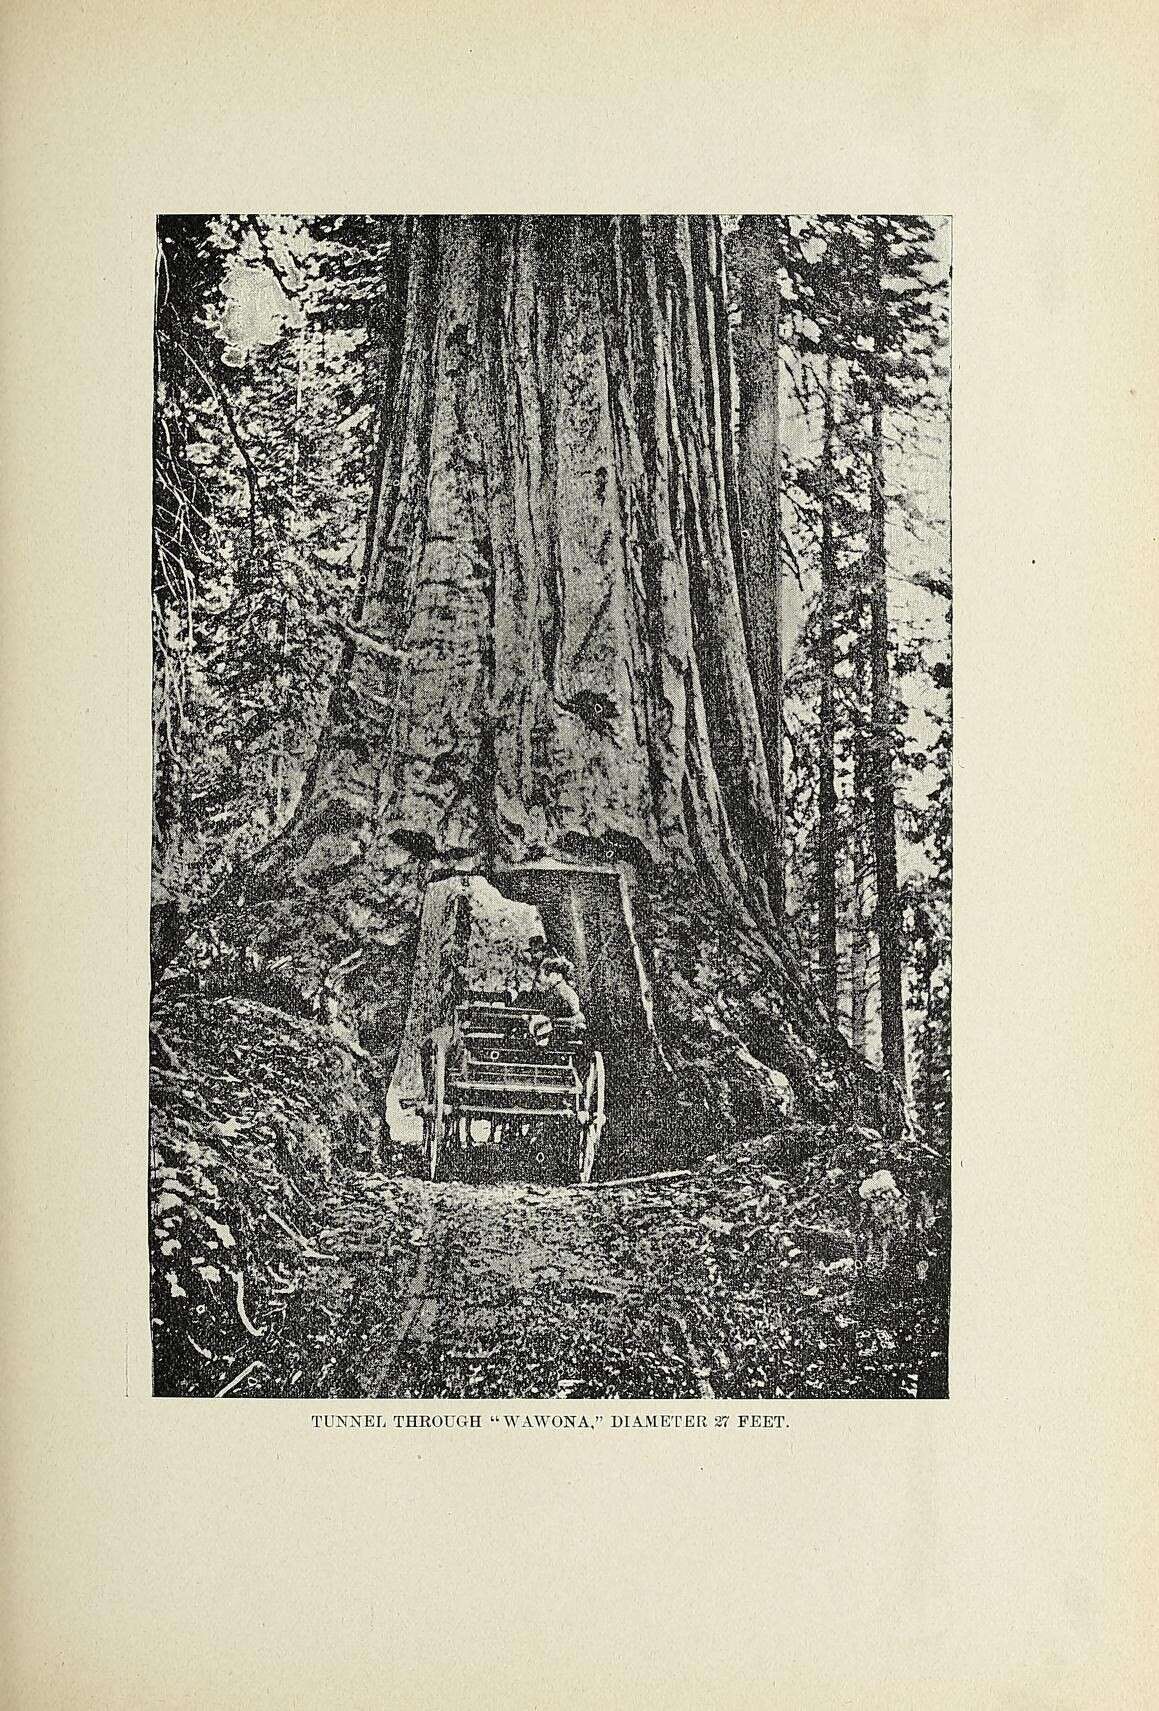 Sequoiadendron resmi